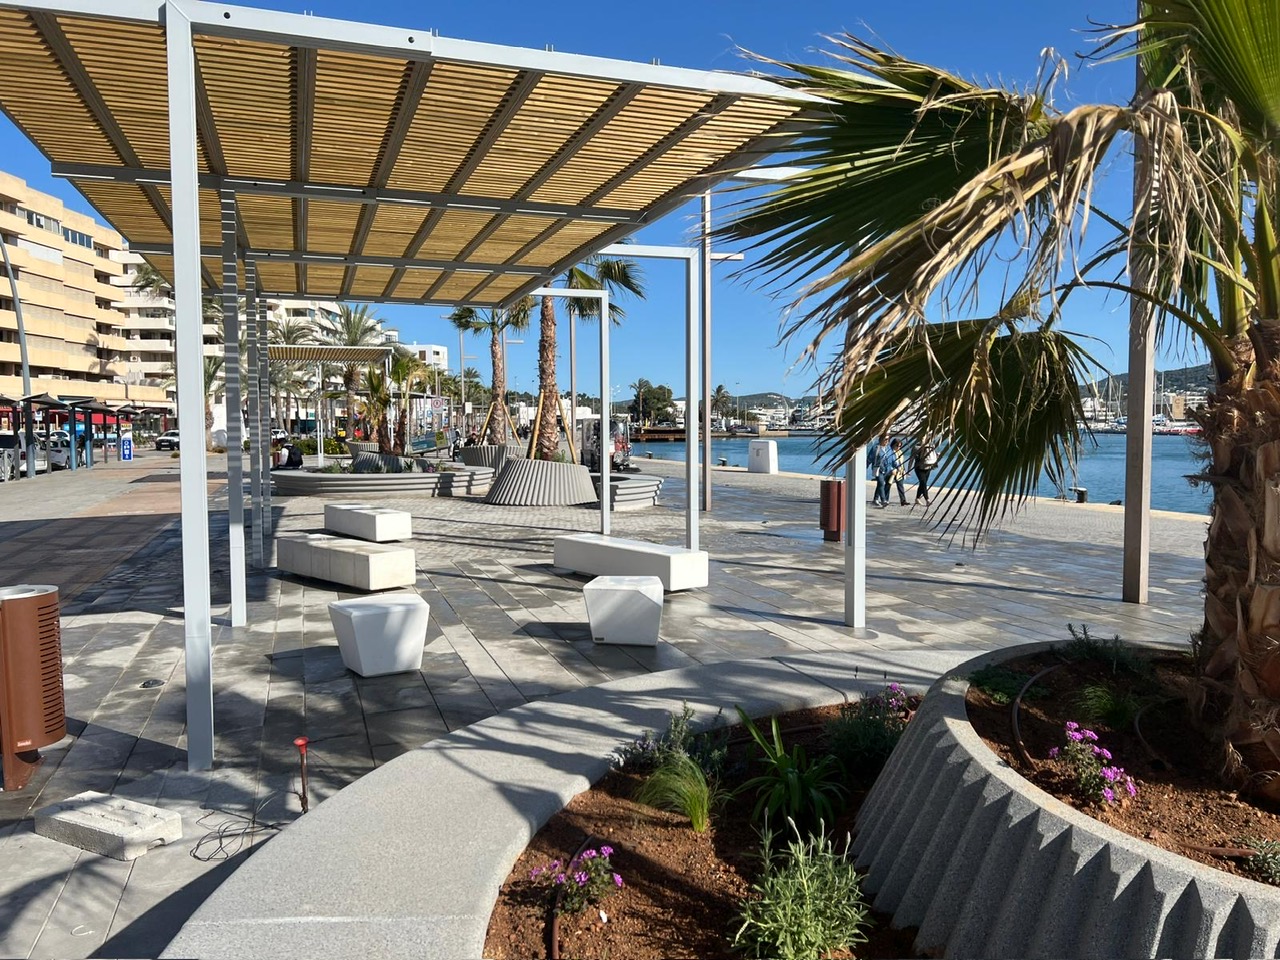 The port of Eivissa unveils a new landscaped area at the Moll de Ribera quay